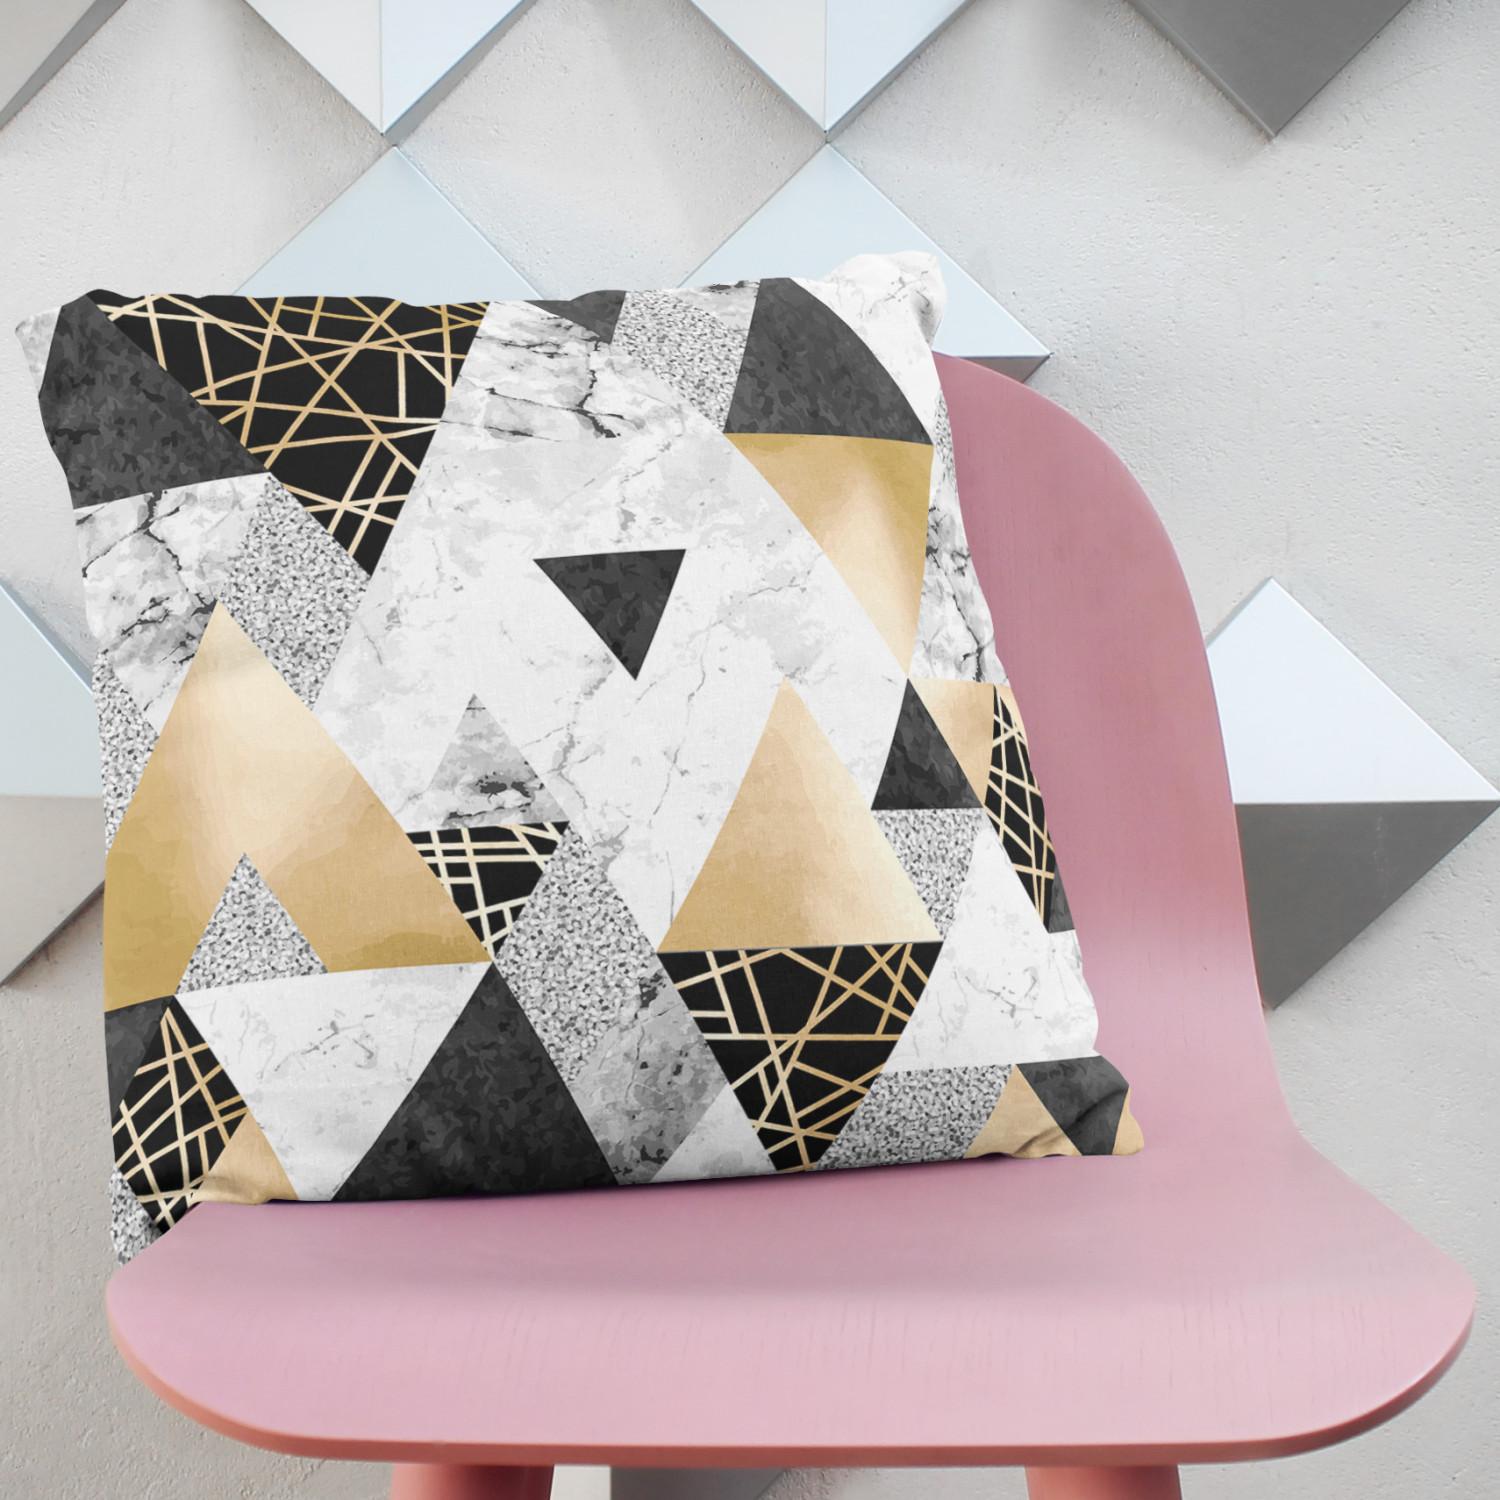 Decorative Microfiber Pillow Elegenat geometry - a minimalist design with imitation marble and gold cushions